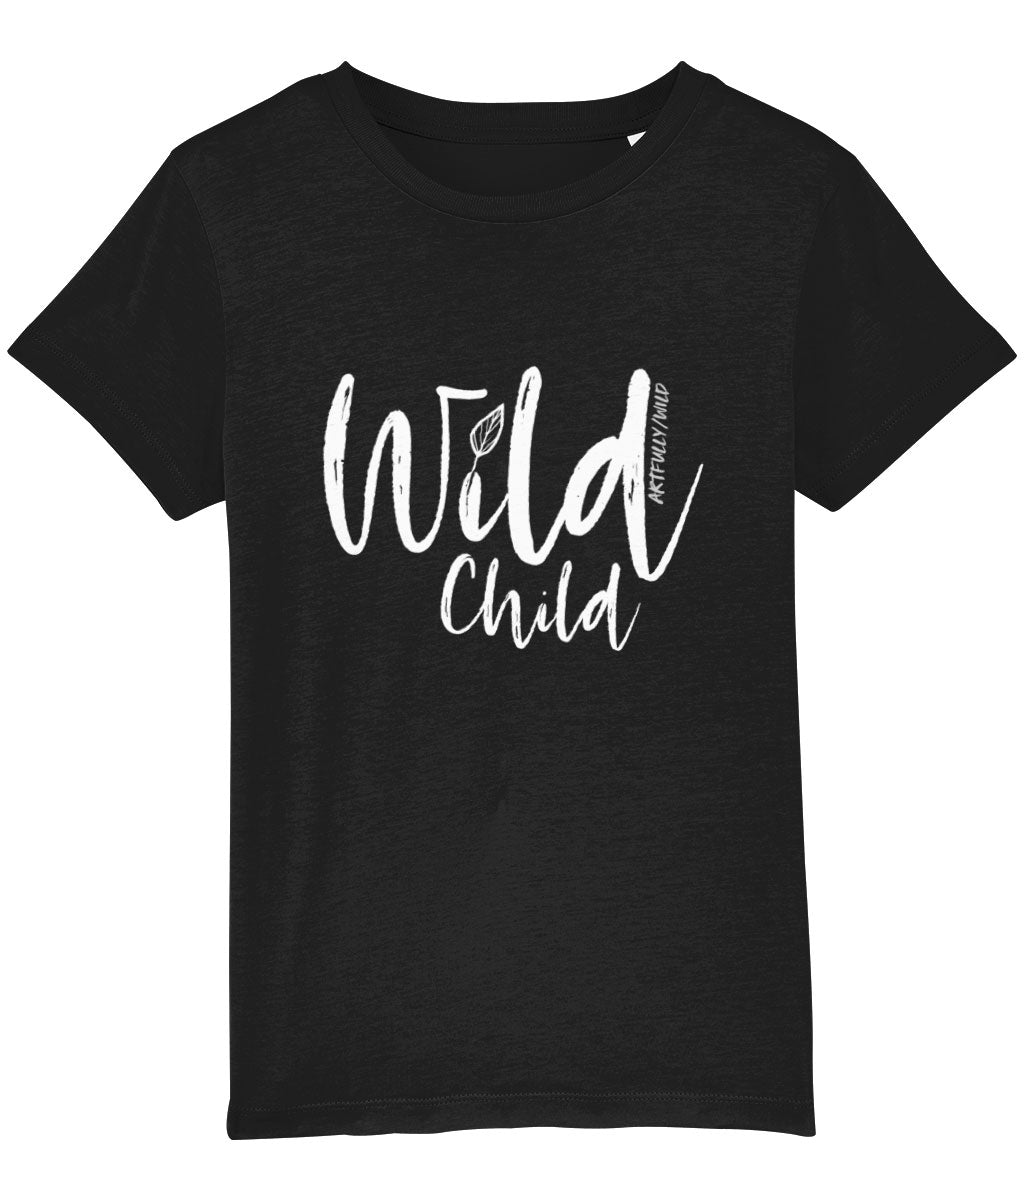 ‘WILD CHILD’ Kids Organic Black T-Shirt for Boys & Girls. White slogan print with water-based inks. Original Design by Artfully Wild.